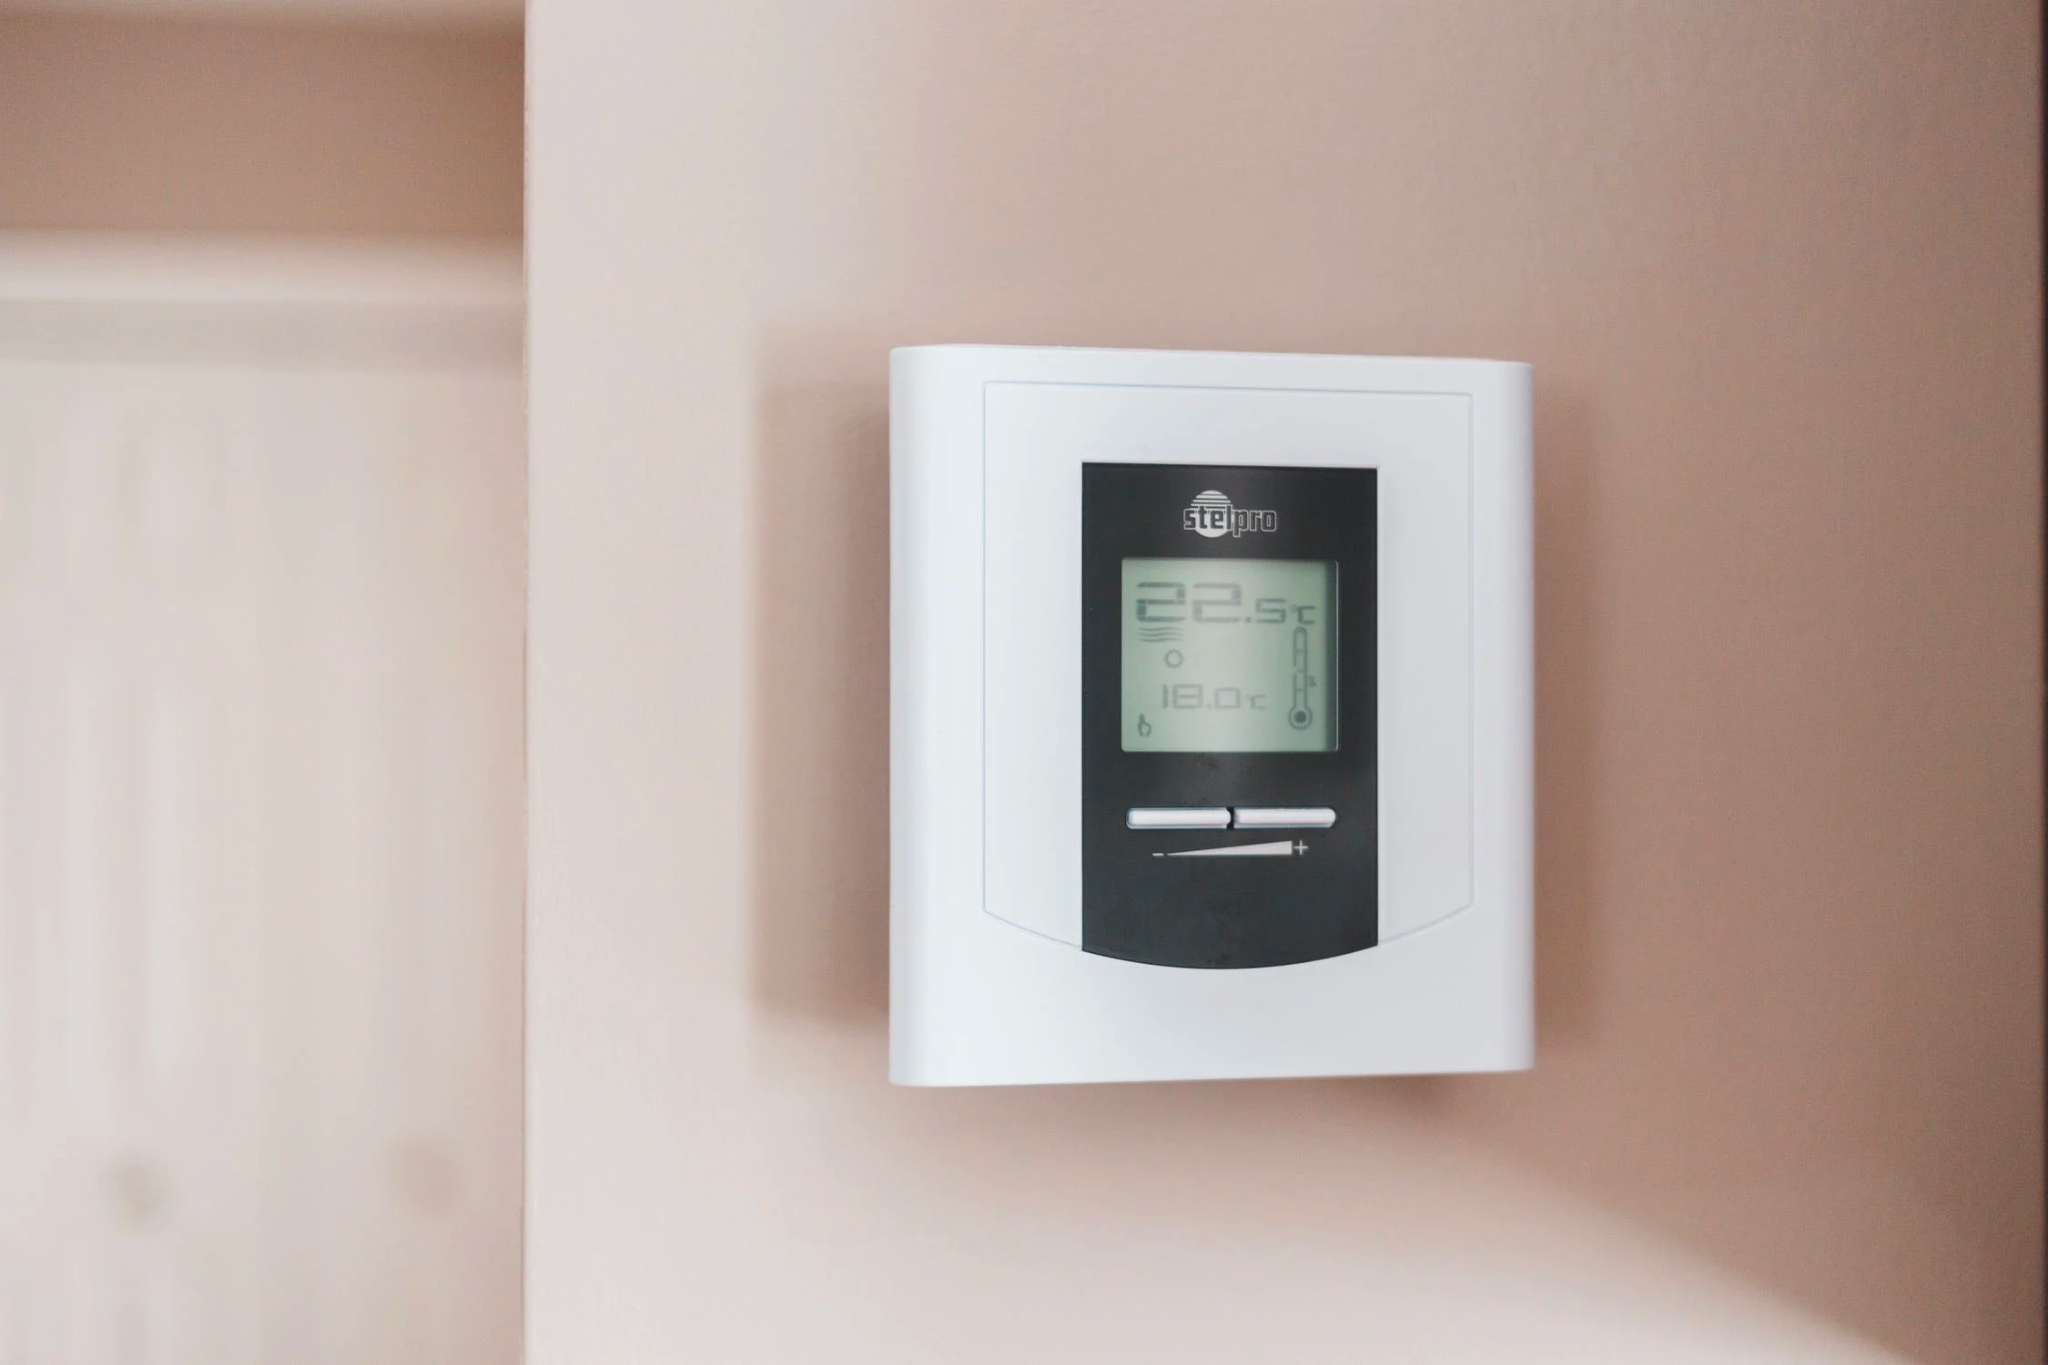 AC Thermostat Problem